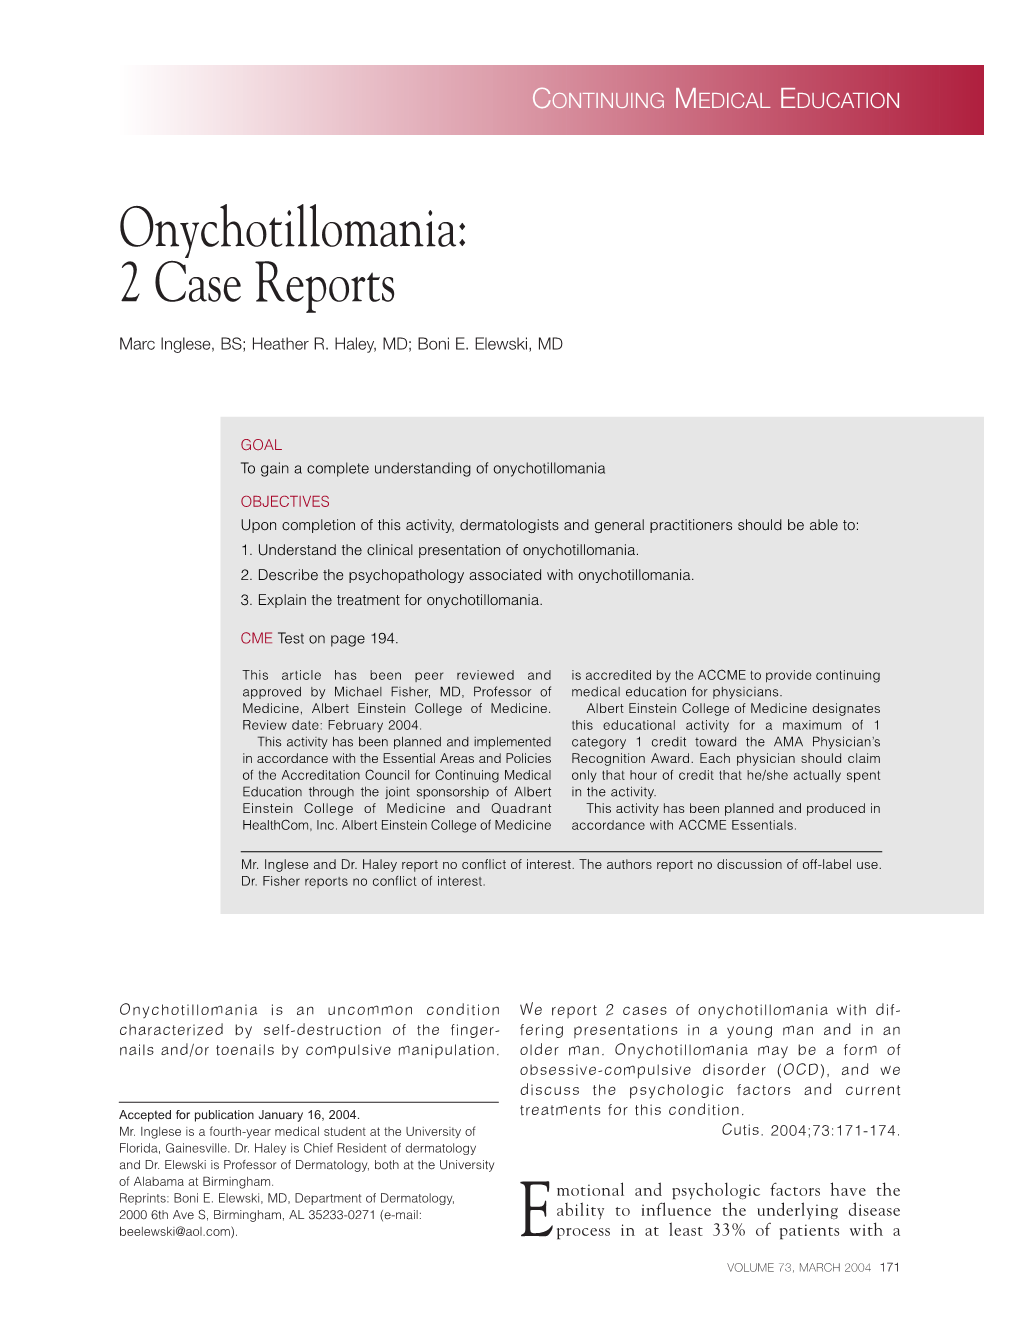 Onychotillomania: 2 Case Reports